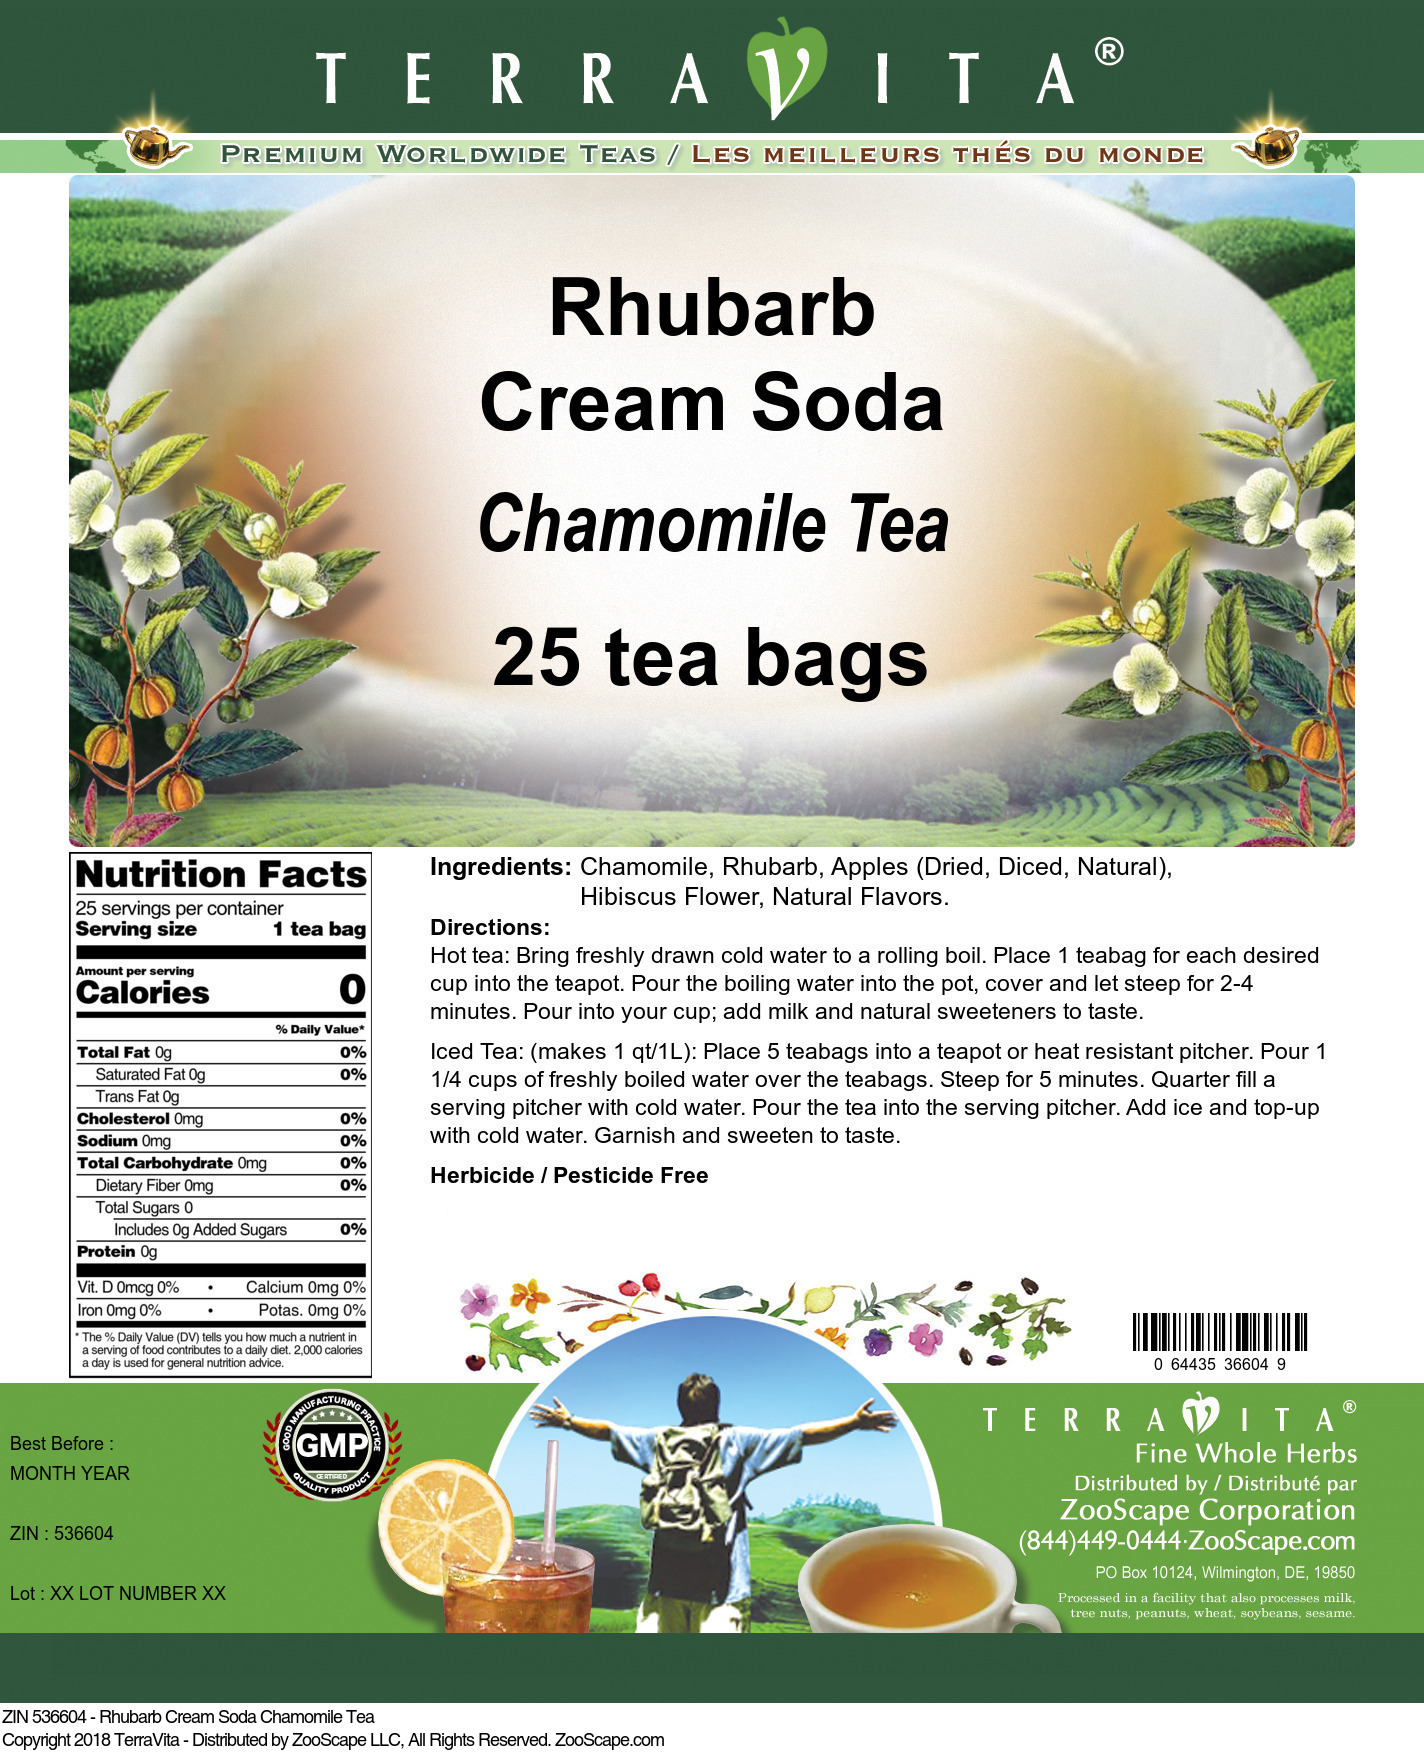 Rhubarb Cream Soda Chamomile Tea - Label